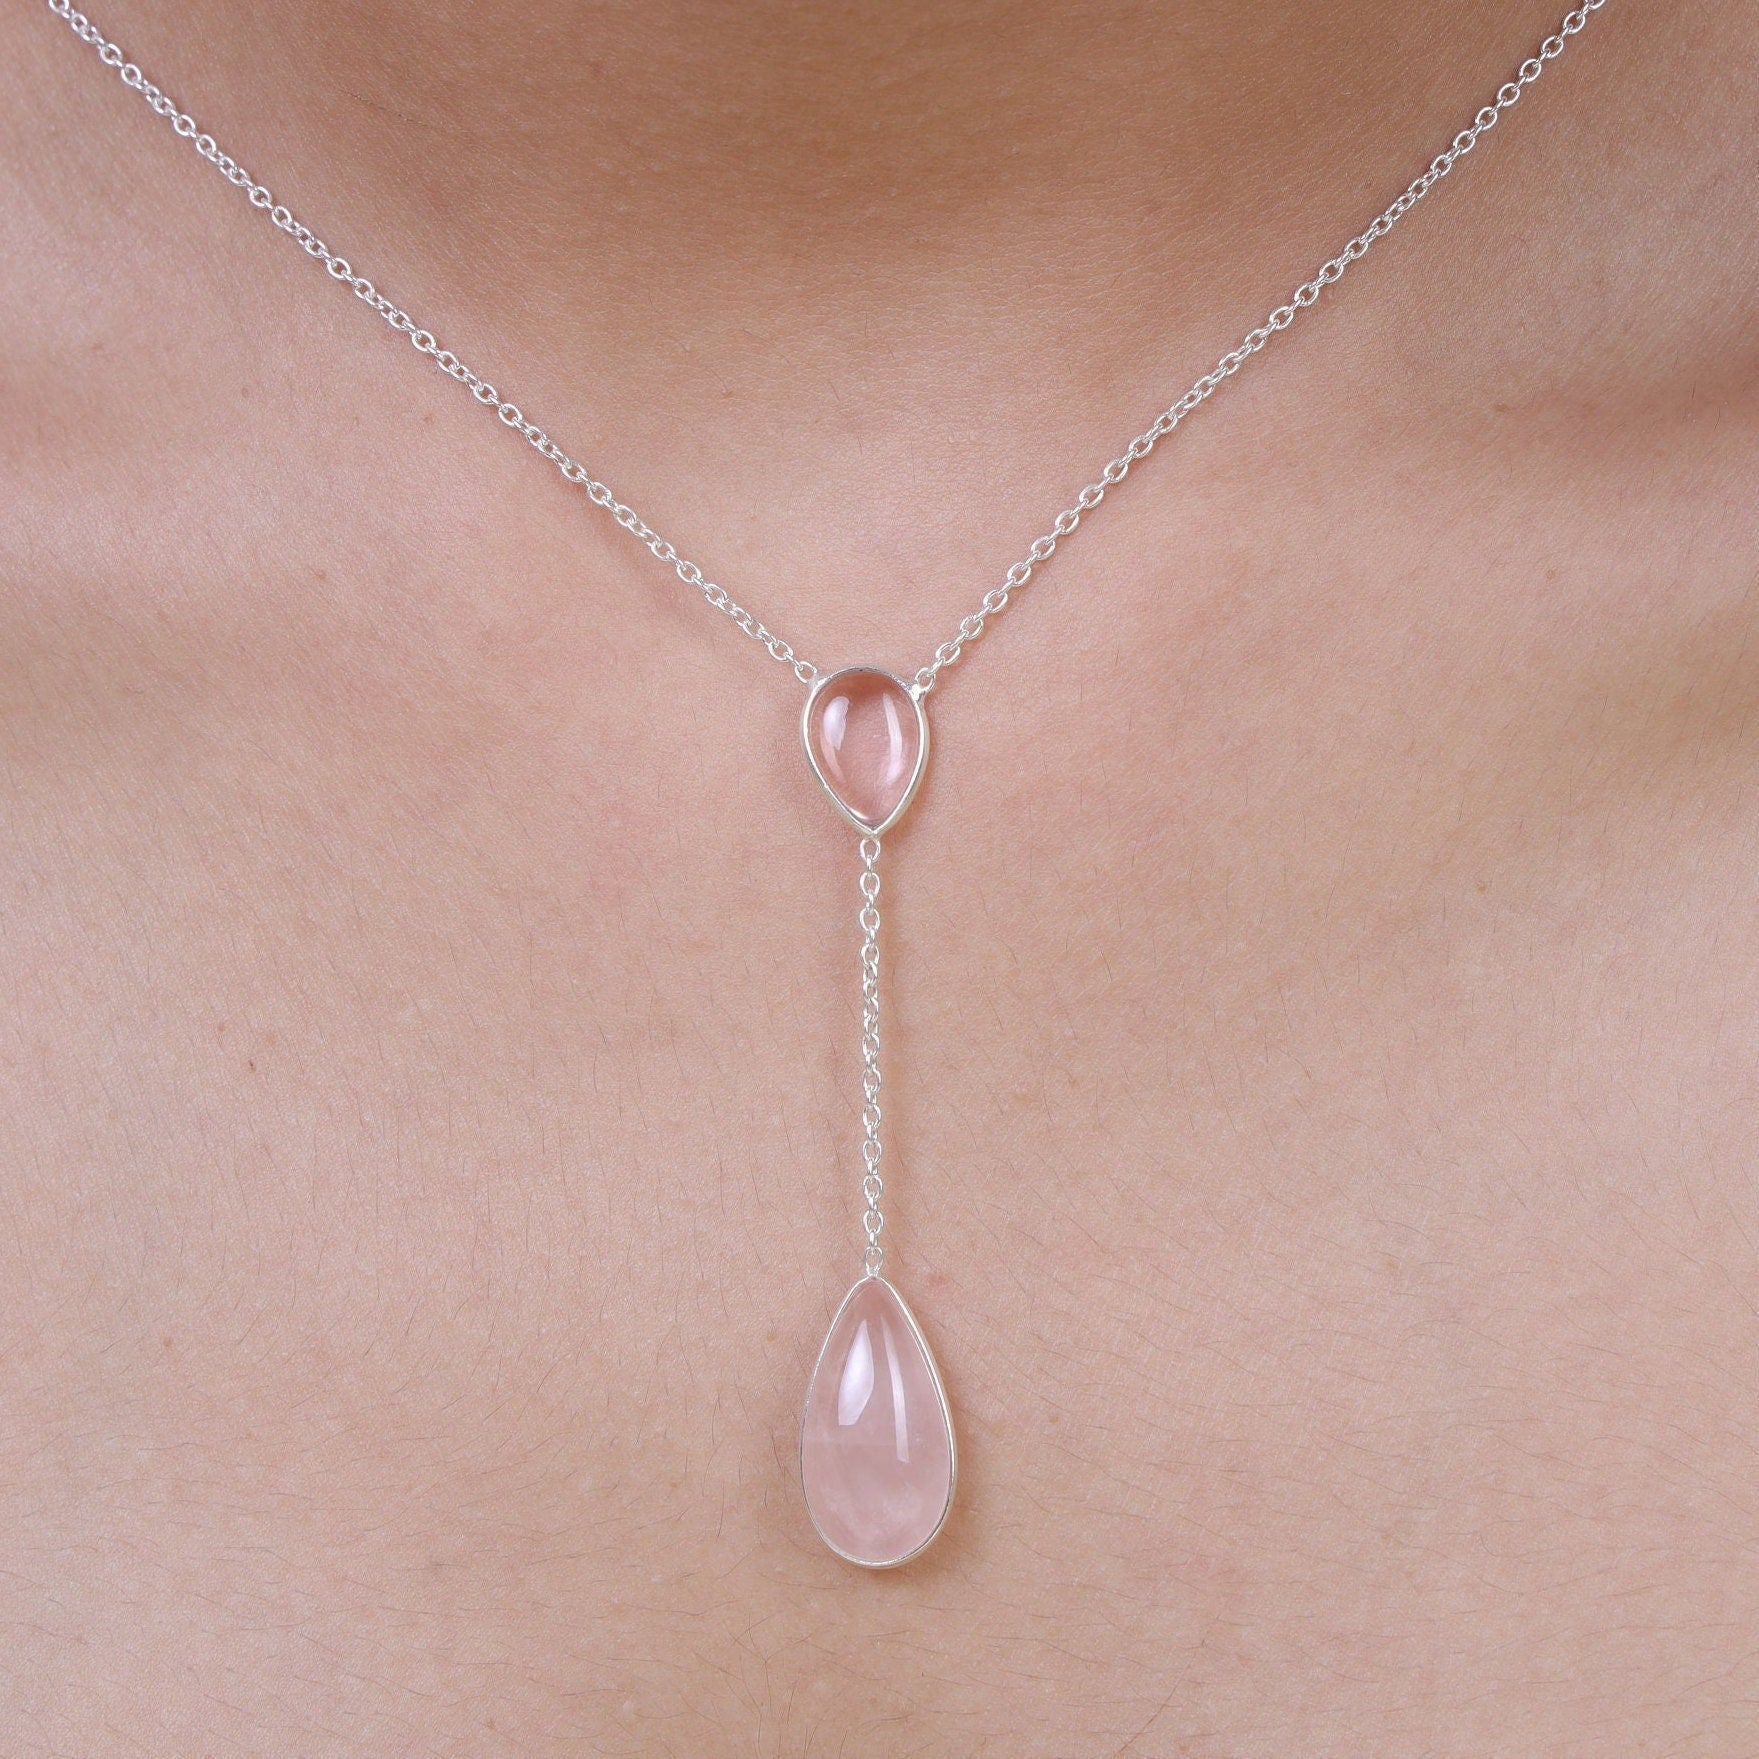 Rose Quartz Pendant, 925 Sterling Silver Pendant, Silver Drop Pendant, Pendant With Chain, January Birthstone, Pink Gemstone Necklace